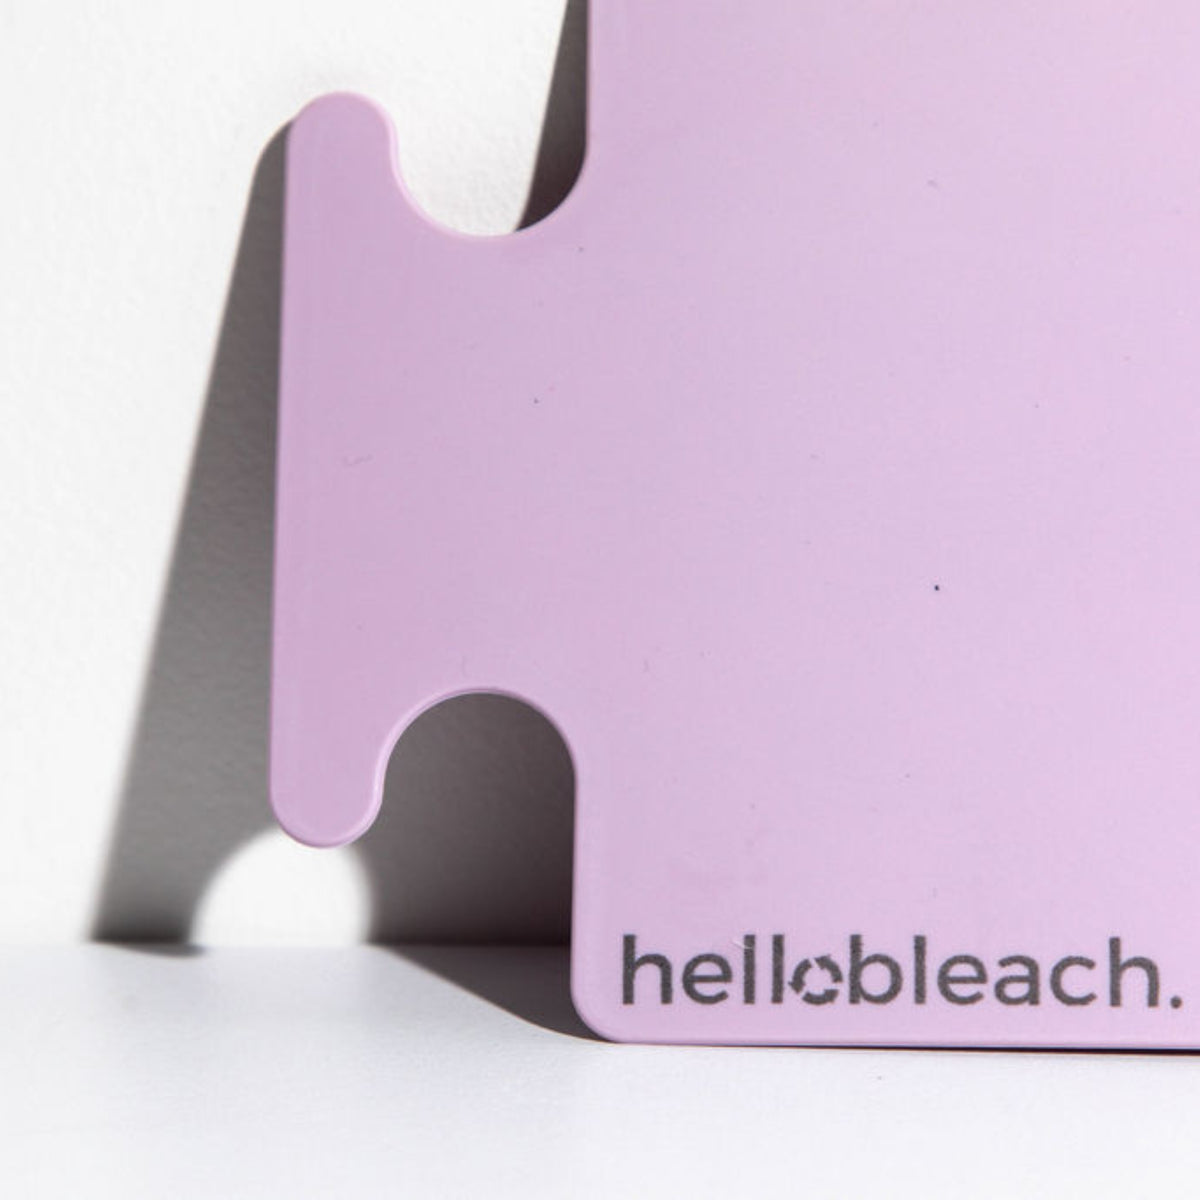 Hello Bleach Balayage Board With Teeth - Hello Bleach